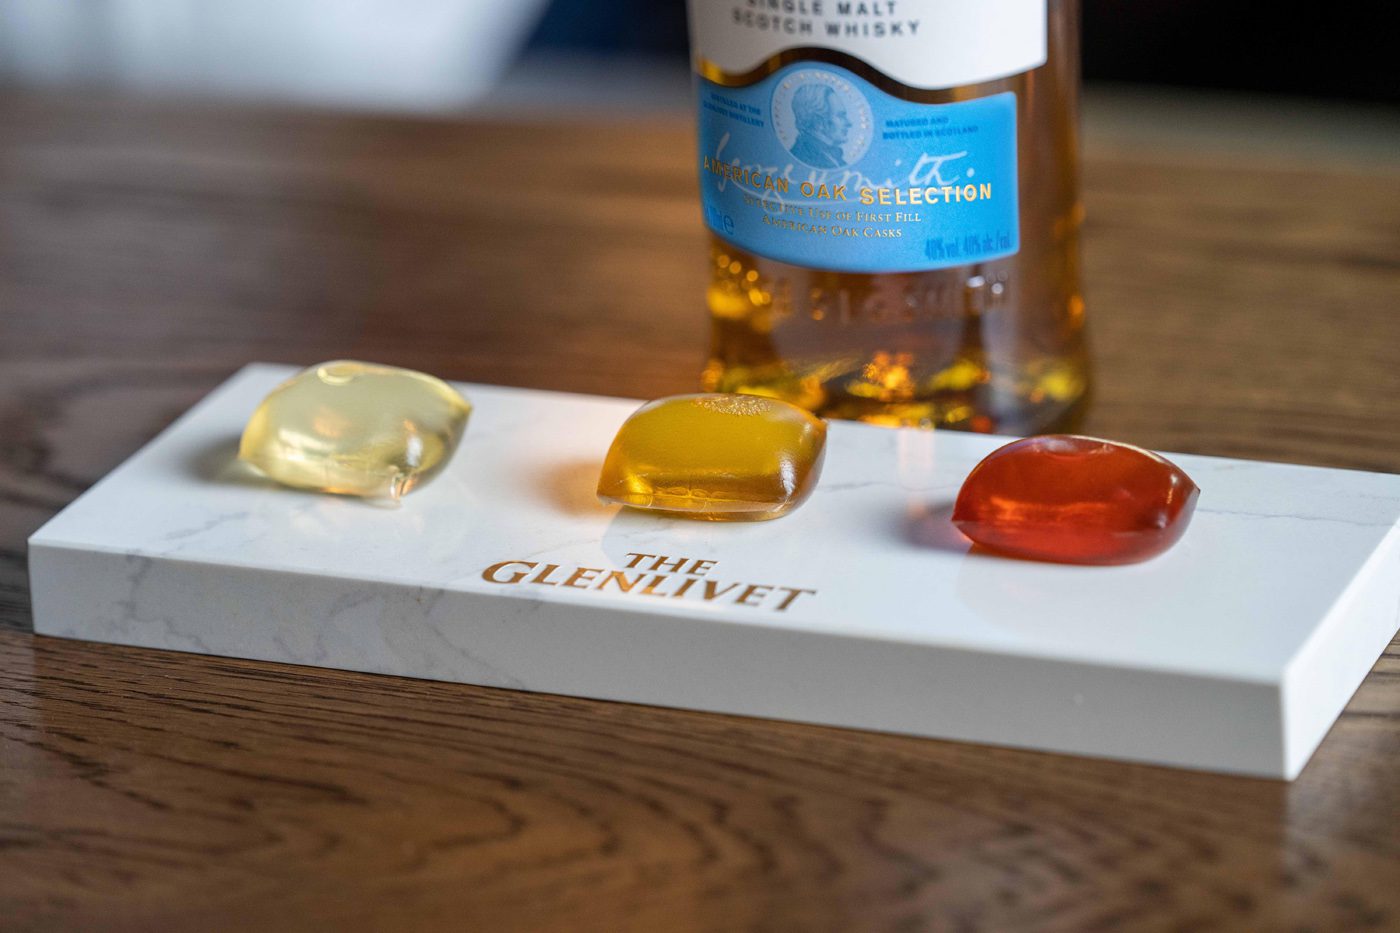 Glenlivet whisky pods